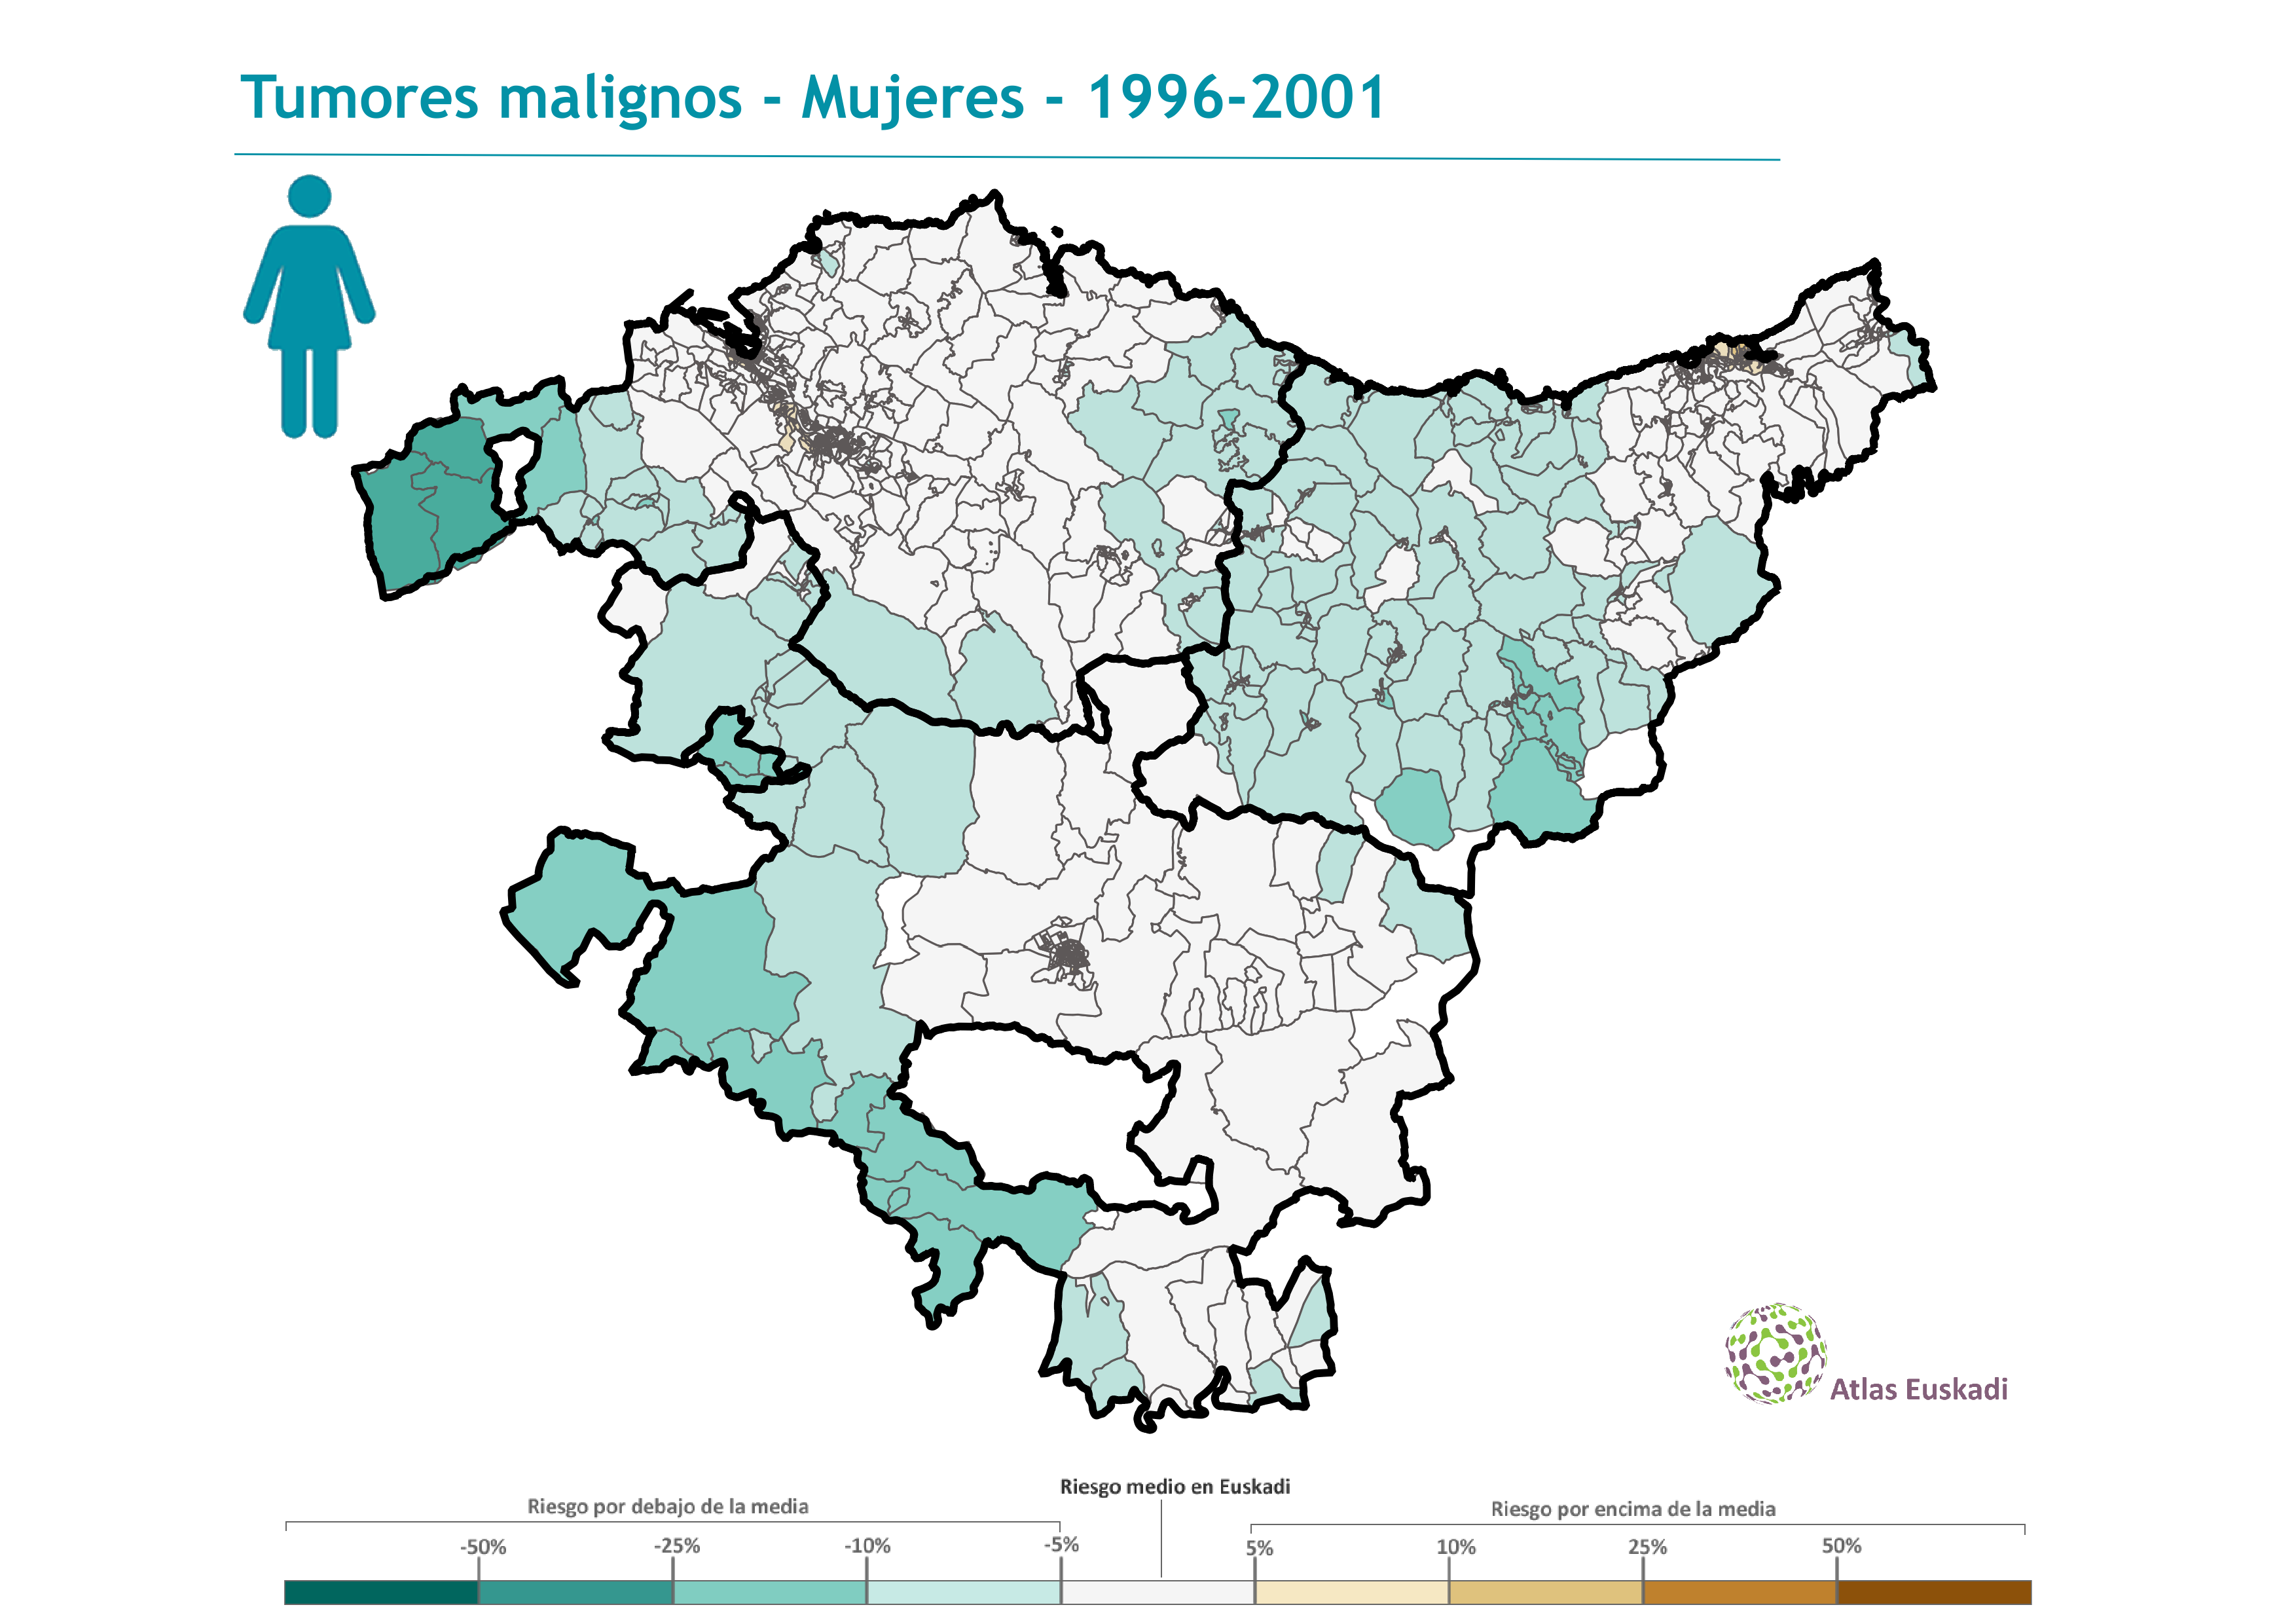 Tumores malignos mujeres  1996-2001 Euskadi